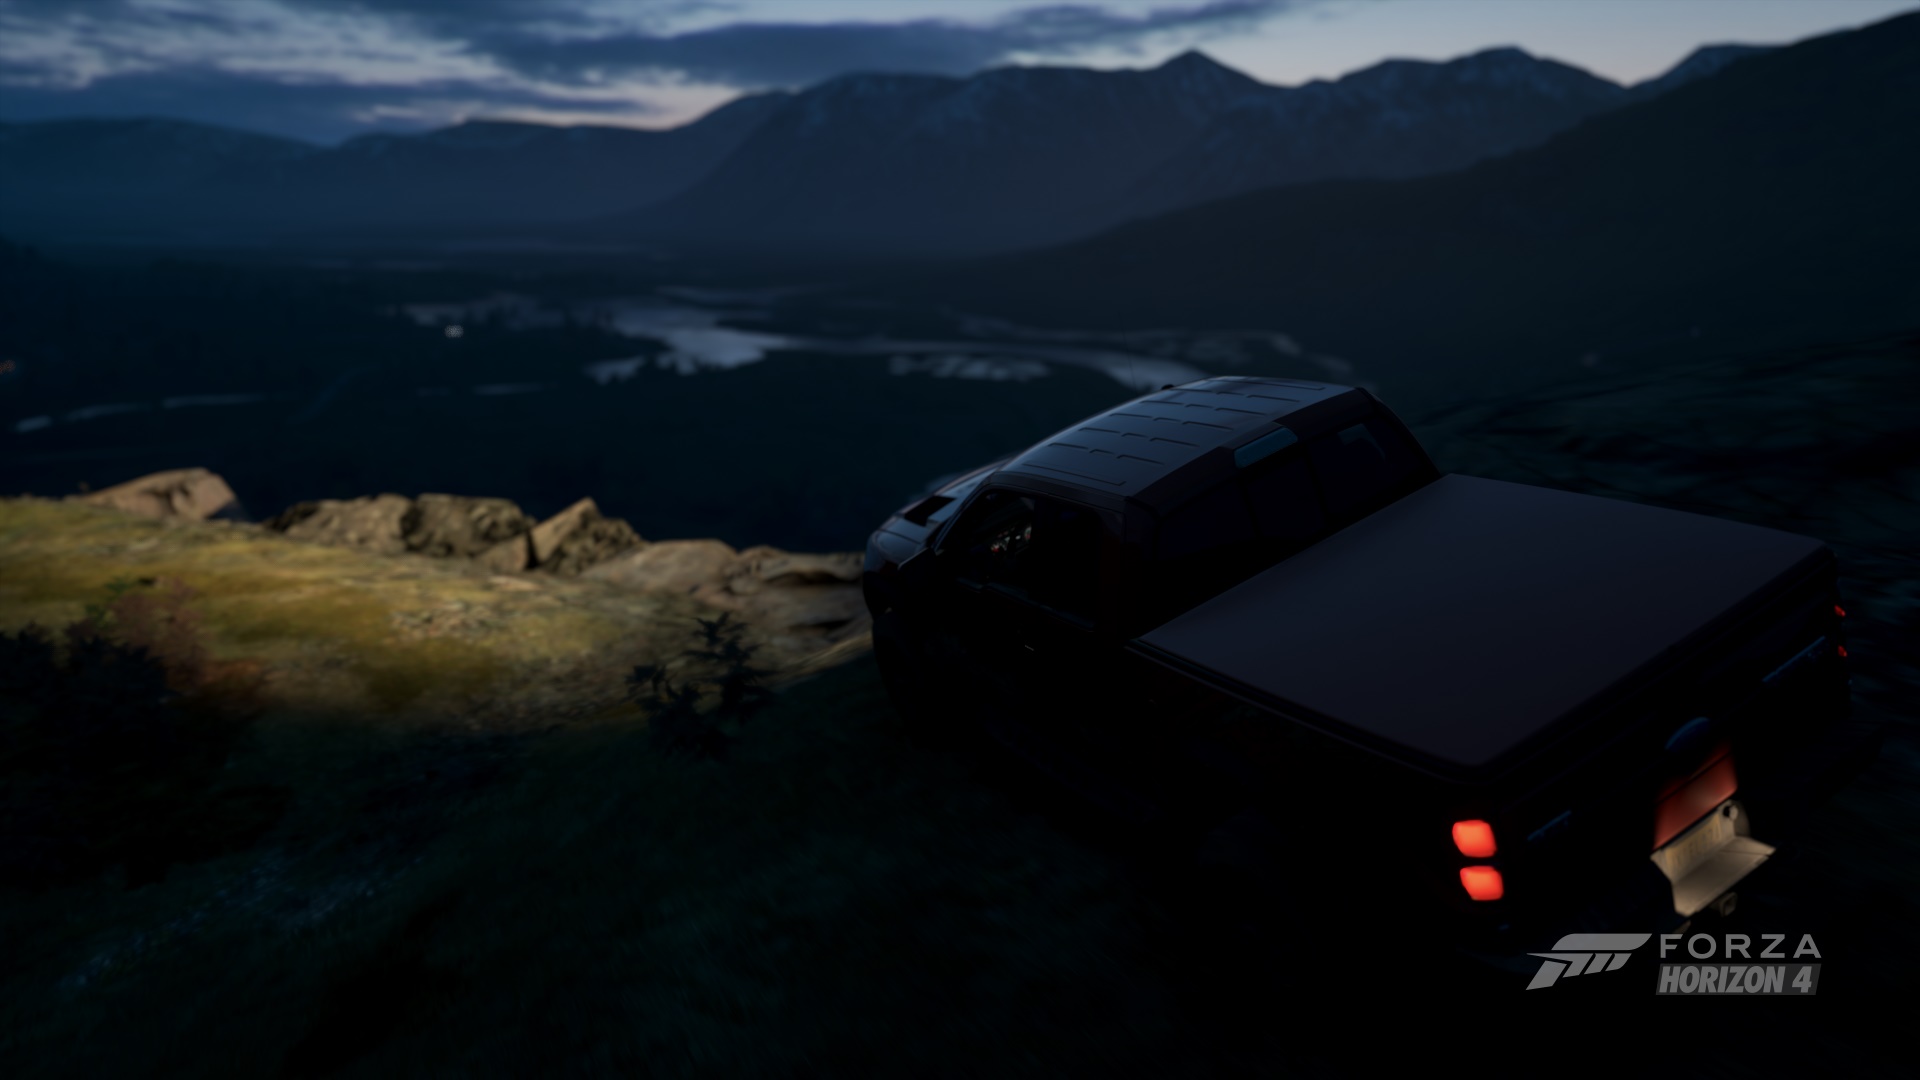 General 1920x1080 Forza truck car vehicle mountains lake offroad 4x4 night video games Forza Horizon 4